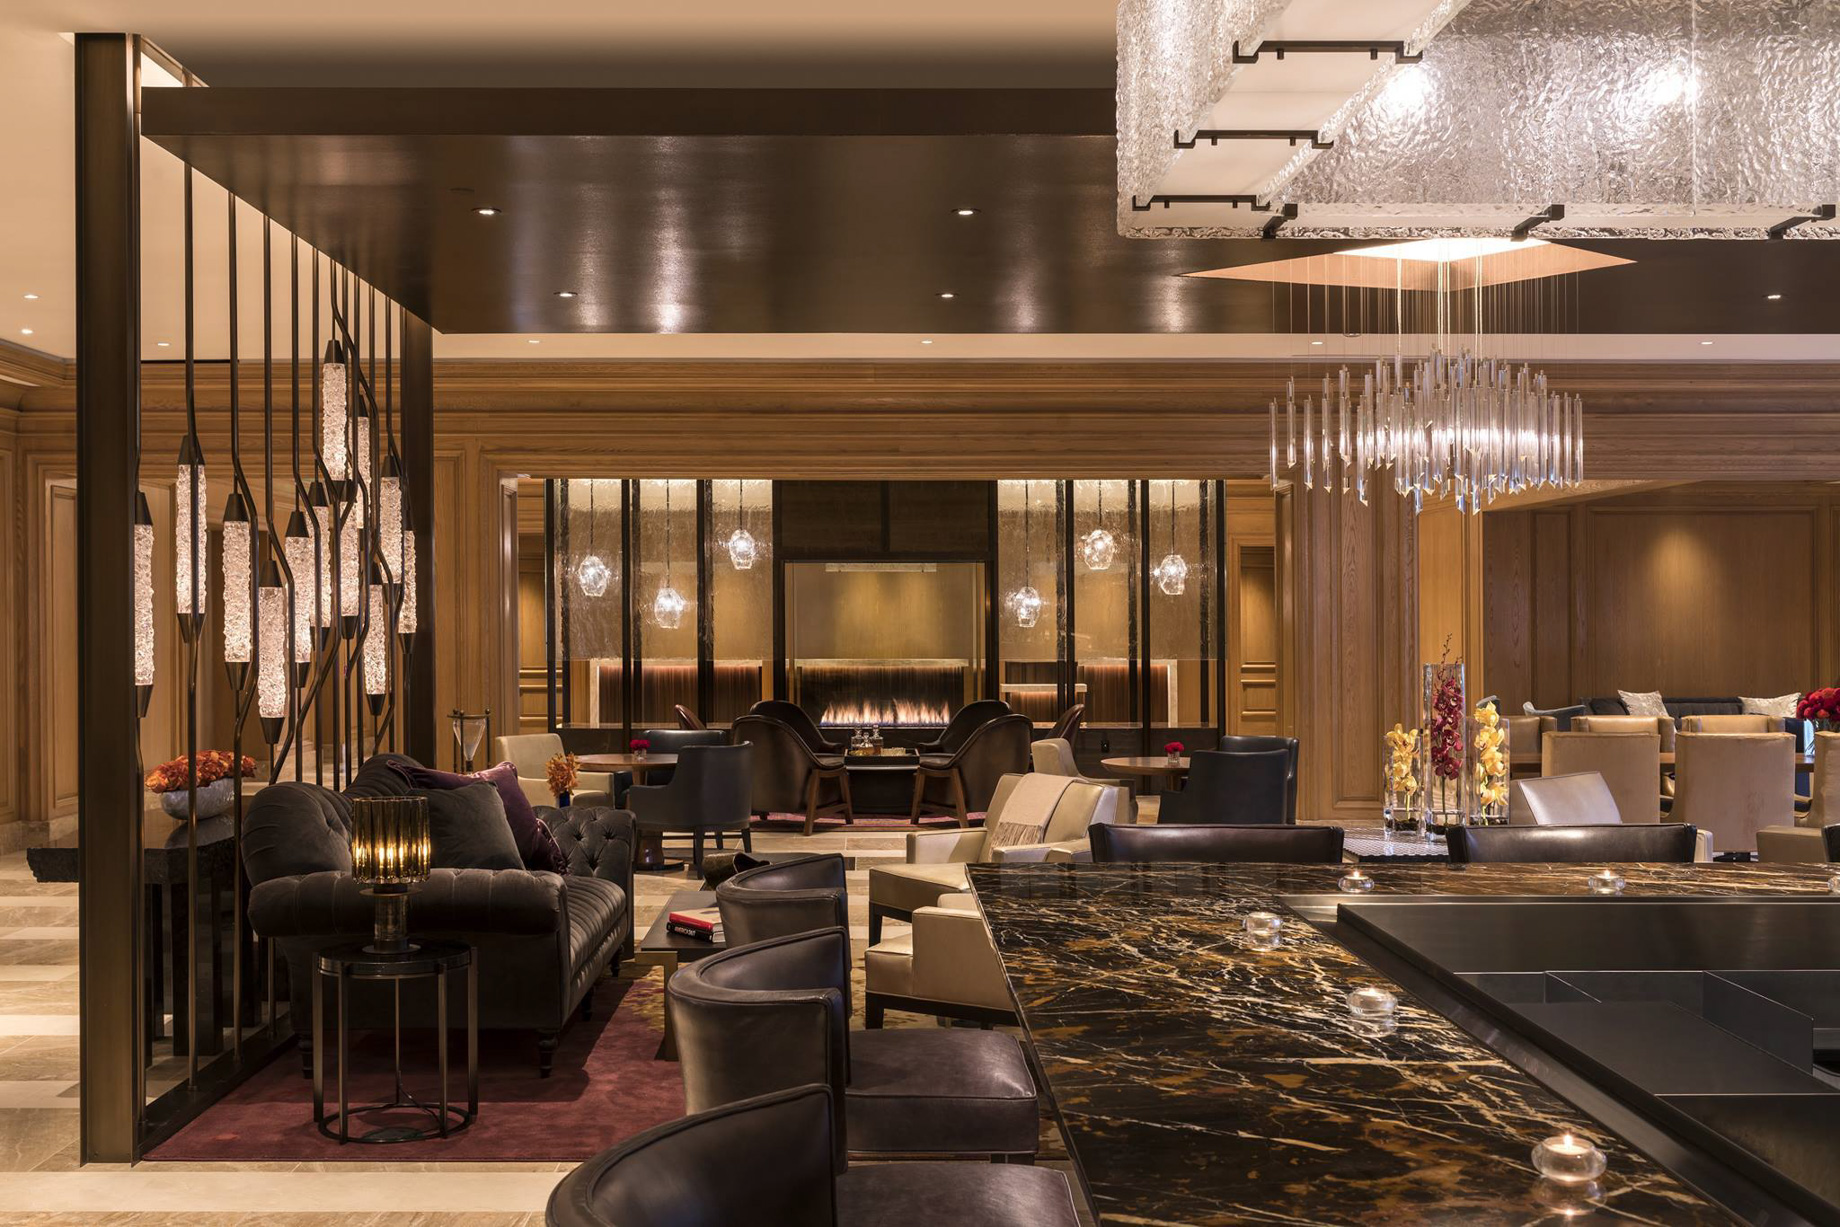 The Ritz-Carlton, Cleveland Hotel - Clevelend, OH, USA - Turn Bar + Kitchen Interior Seating